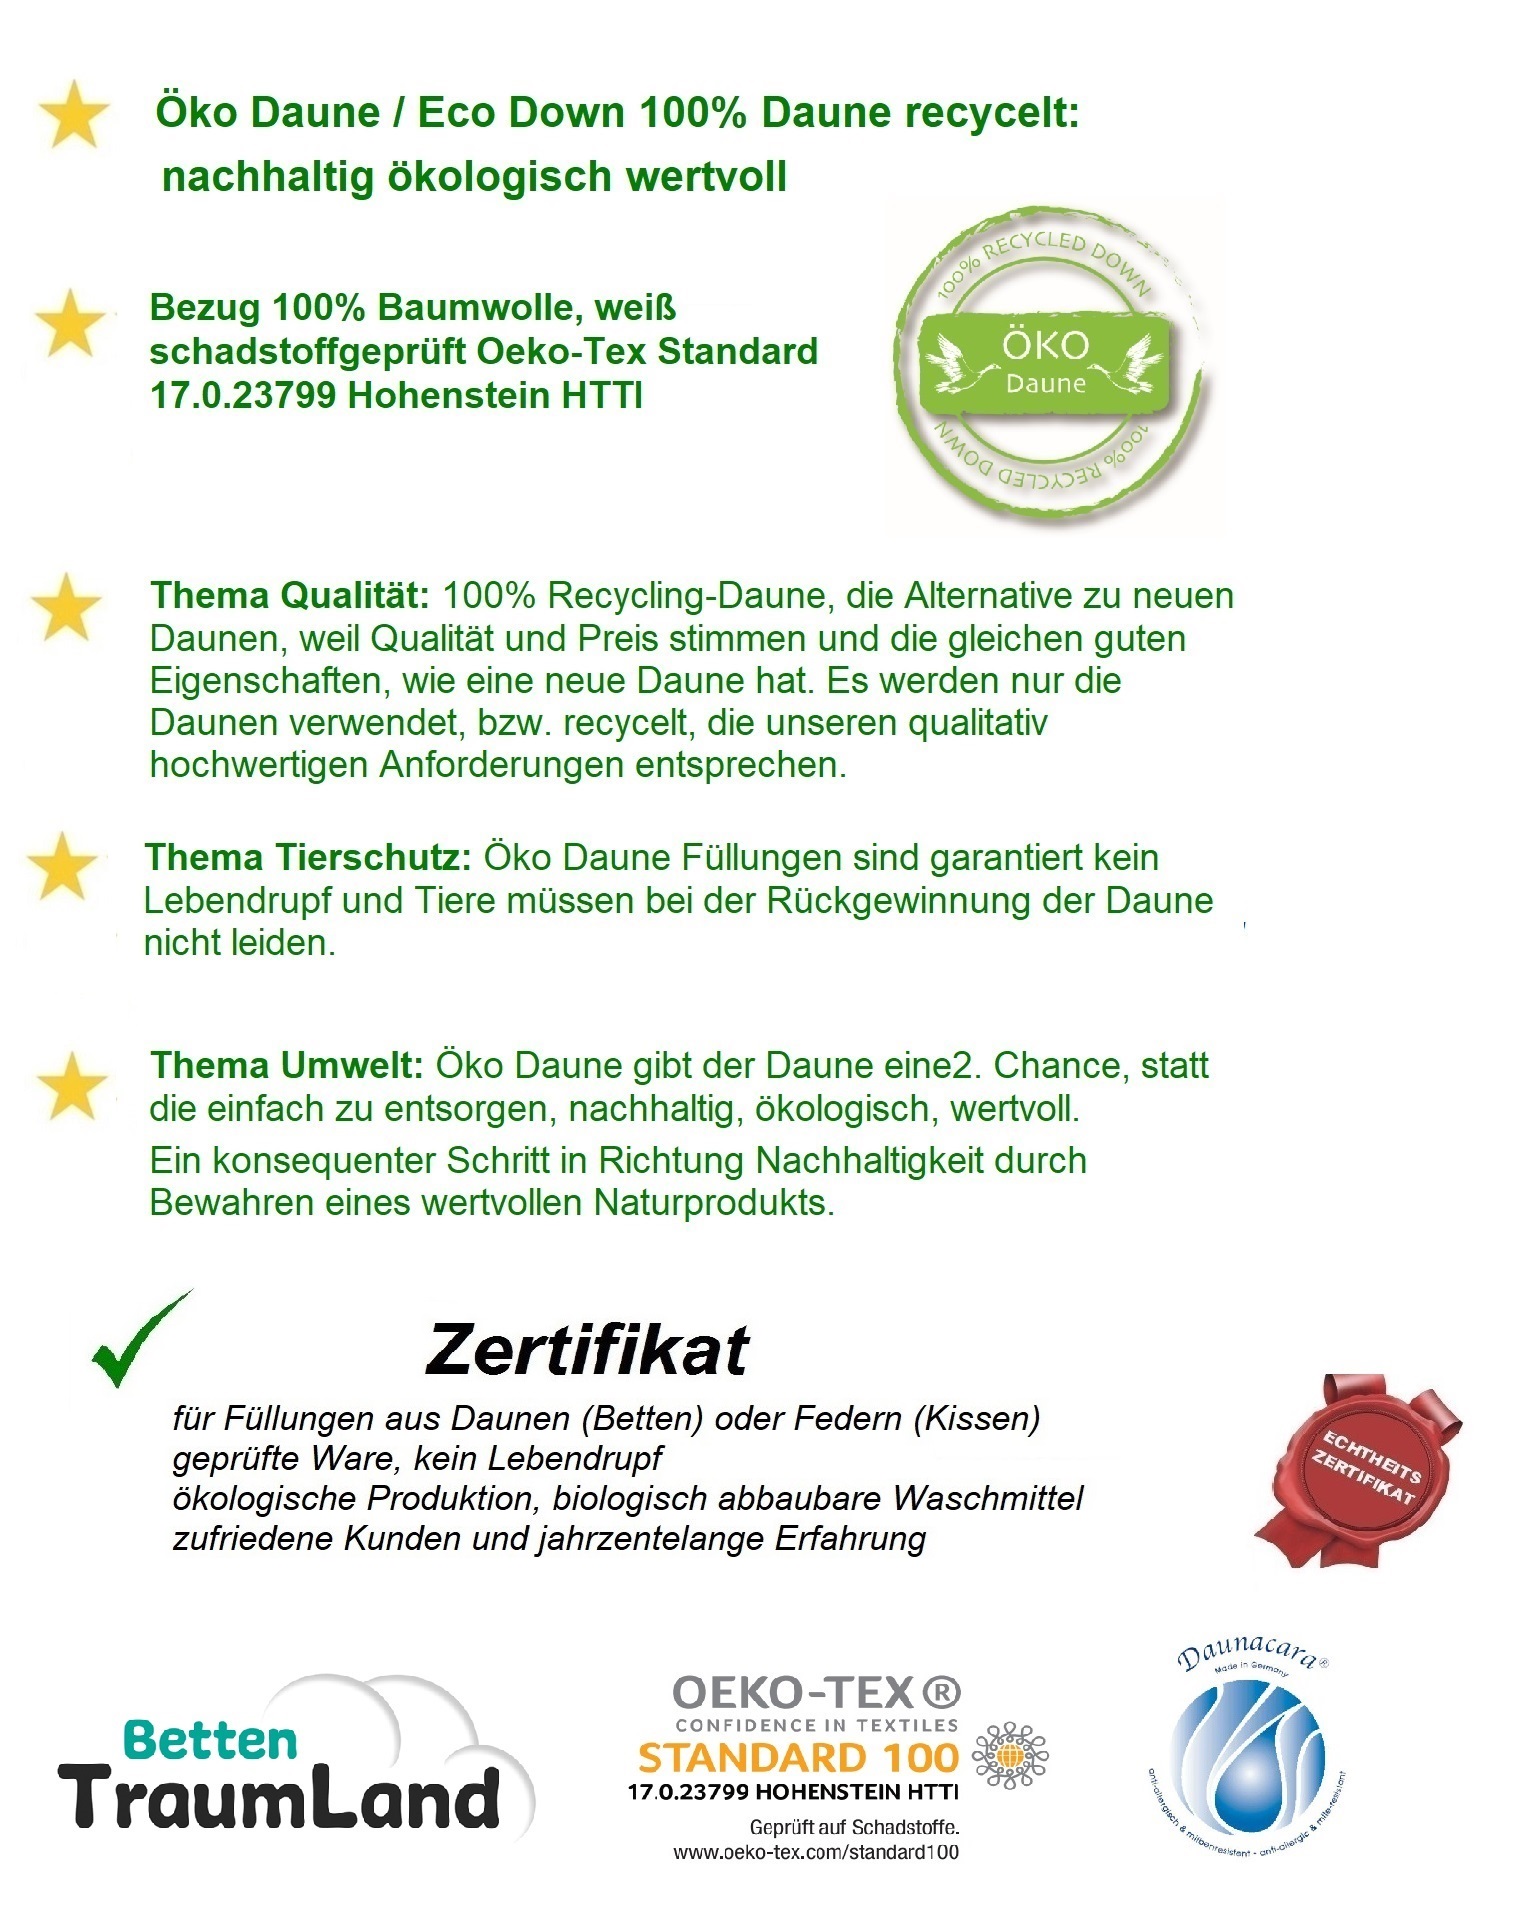 Öko Daune Kissen 40x80 weich 70% Recycling Federn 30% Recycling Daune nachhaltig